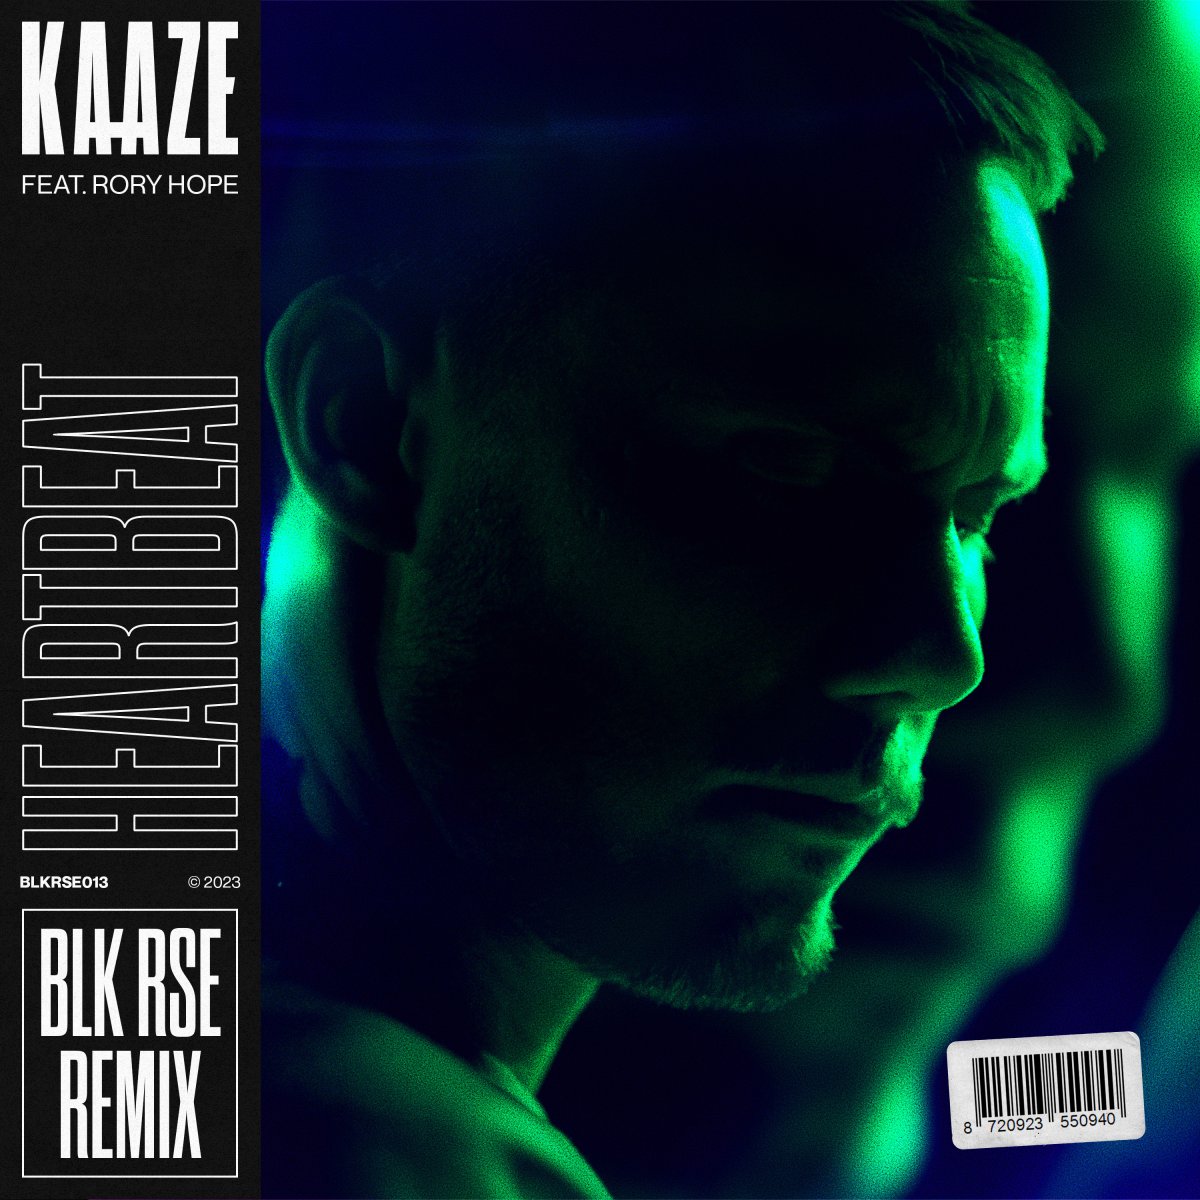 Heartbeat (BLK RSE Remix) - KAAZE⁠ feat. Rory Hope⁠ 